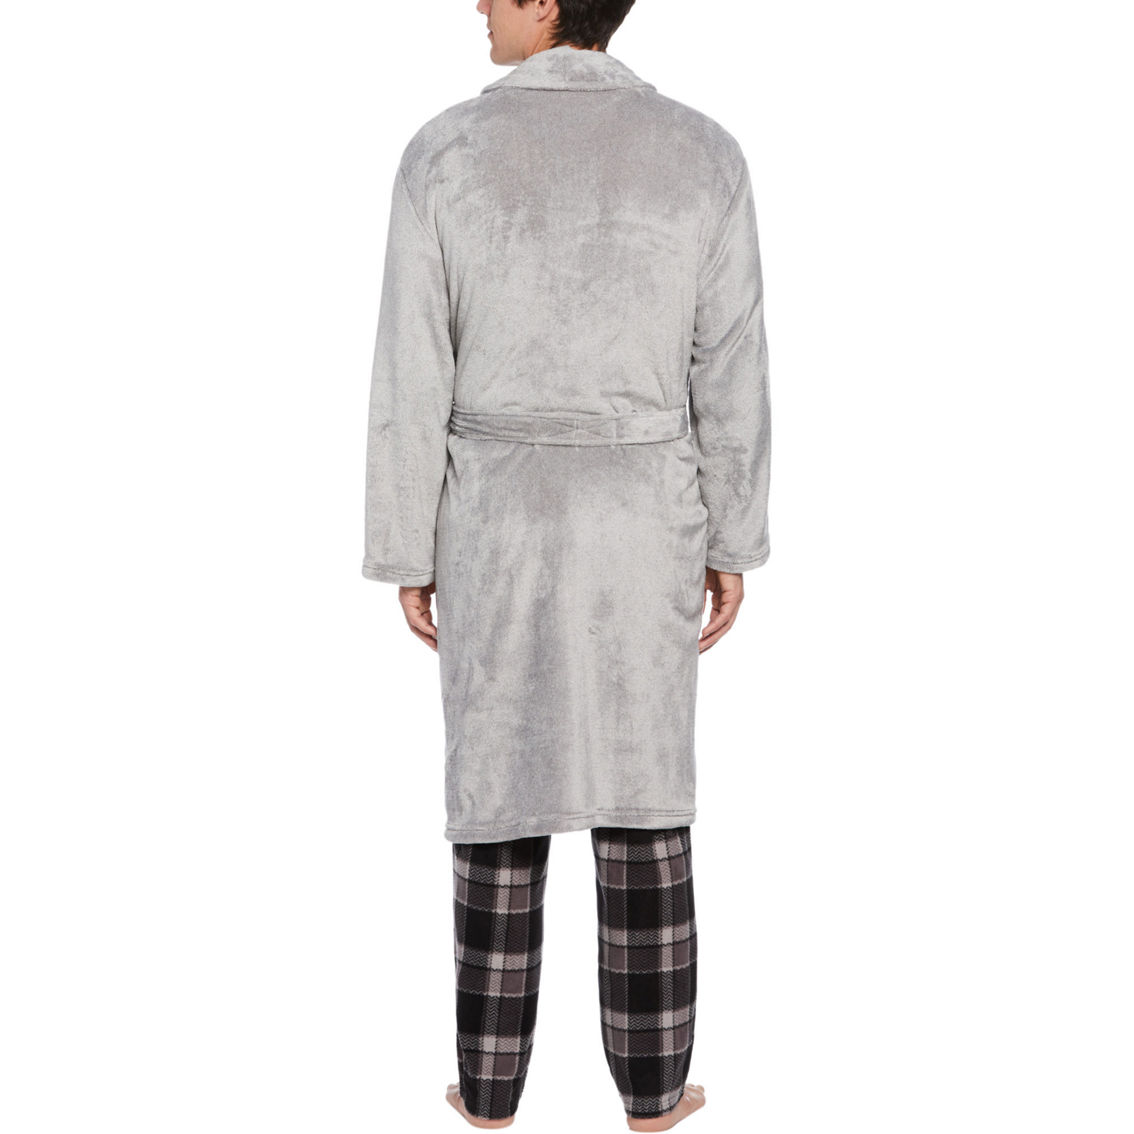 Perry Ellis Fleece Marled Robe | Pajamas & Robes | Clothing ...